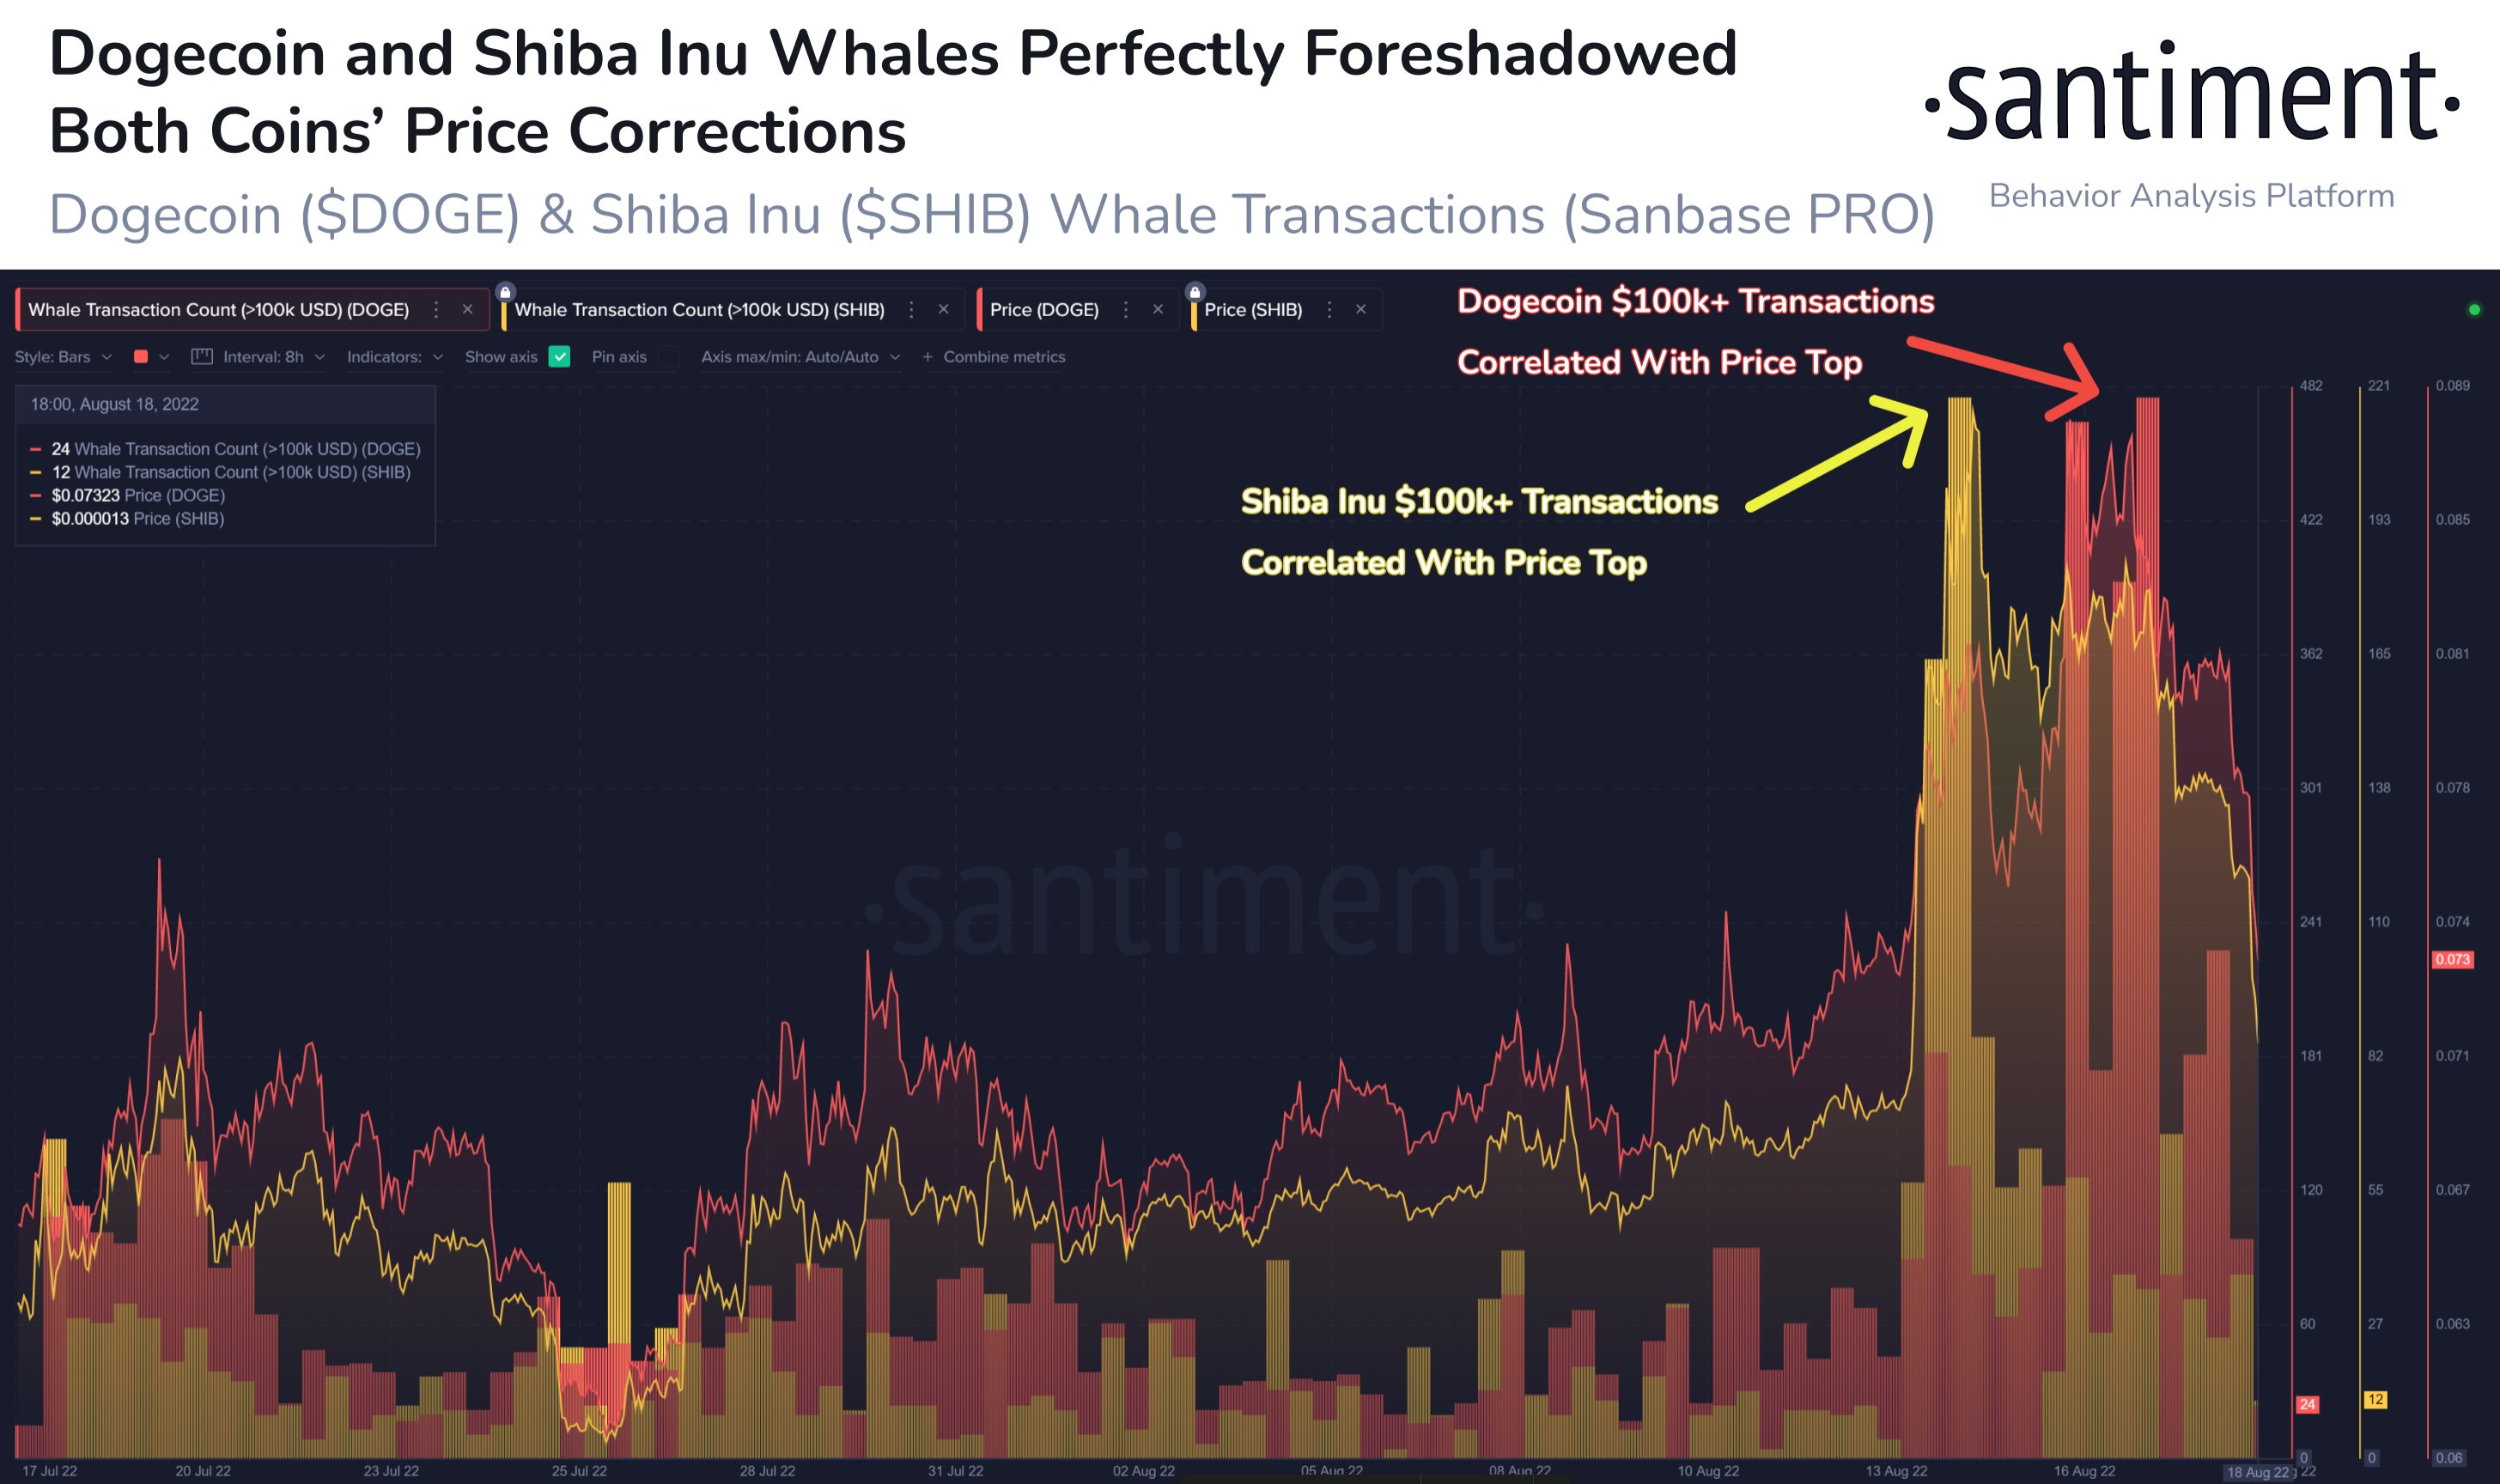 Dogecoin and Shiba Inu whale activity